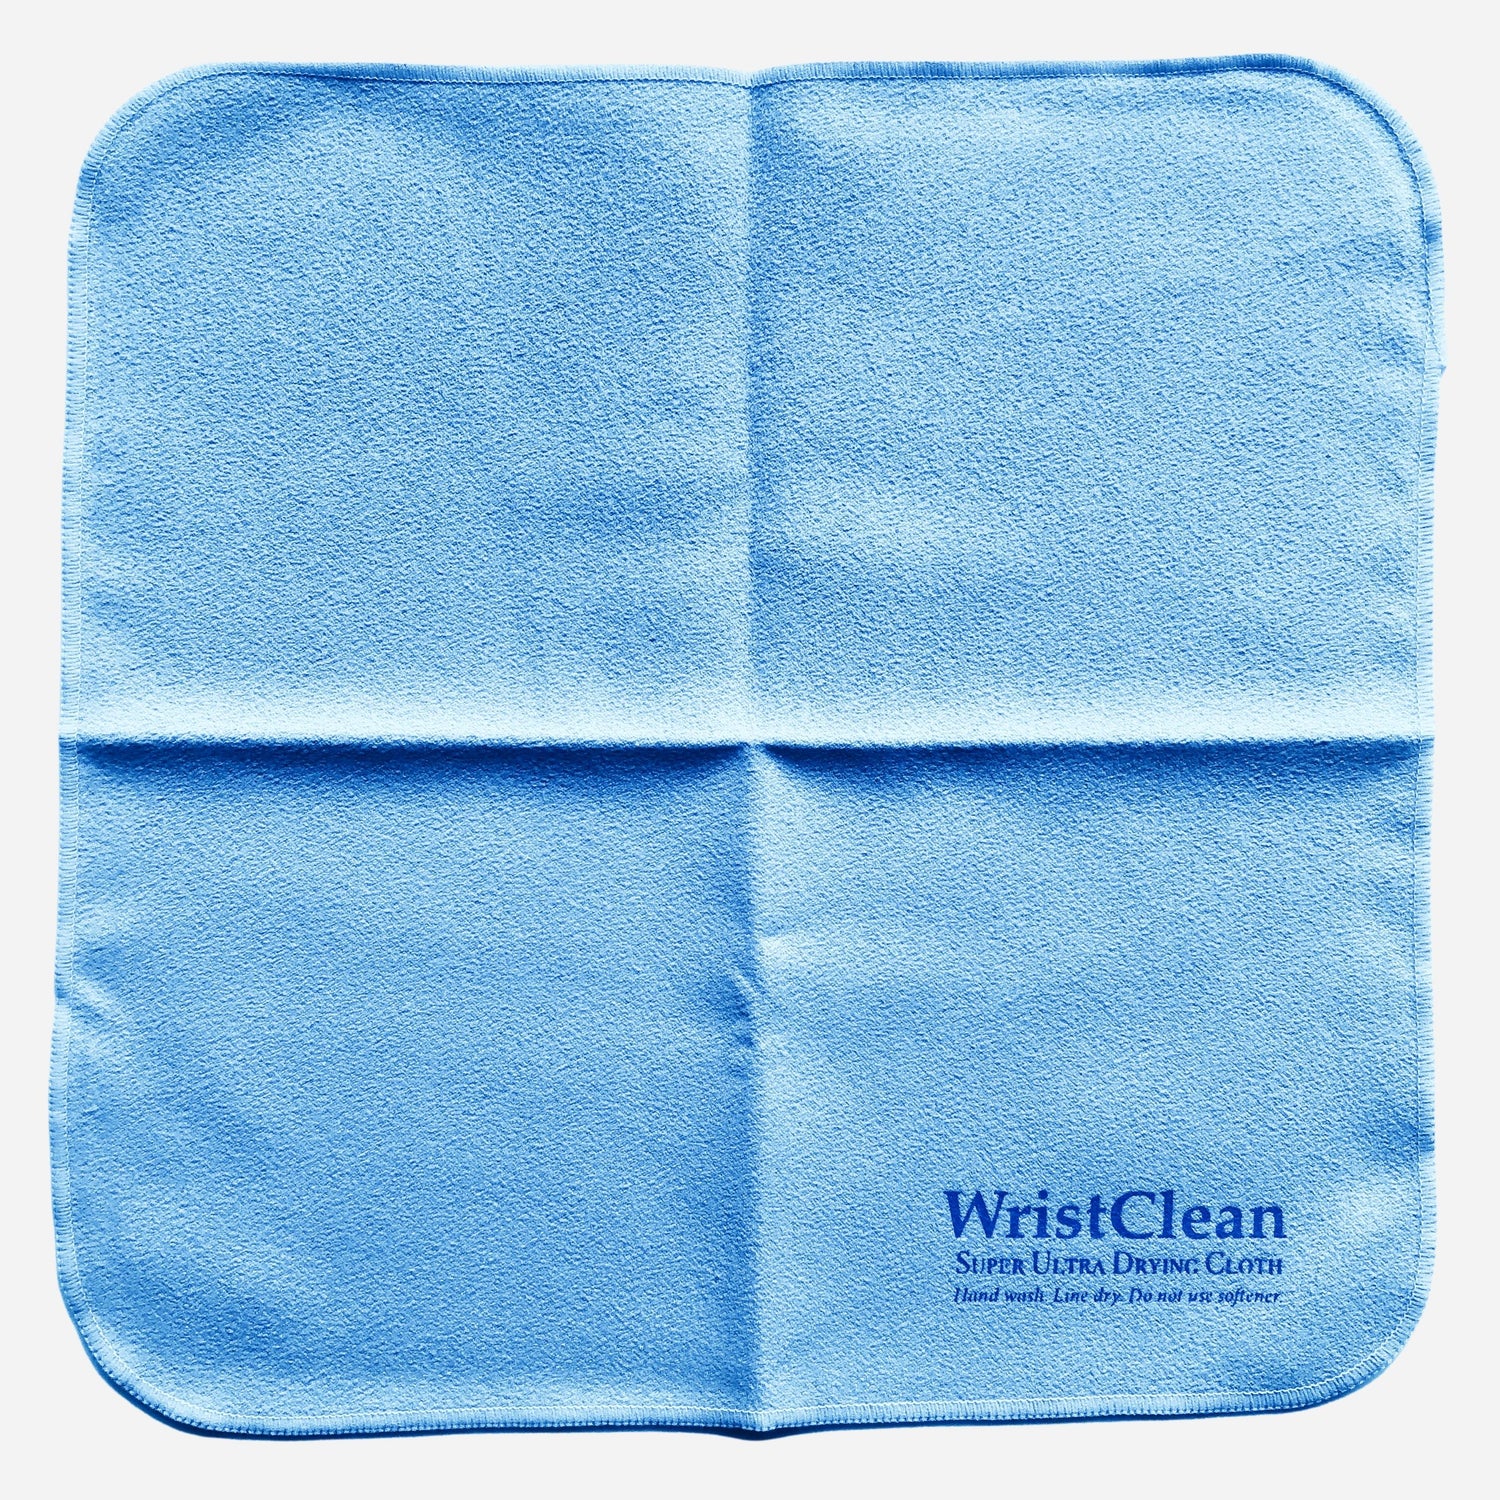 WristClean Drying Cloth